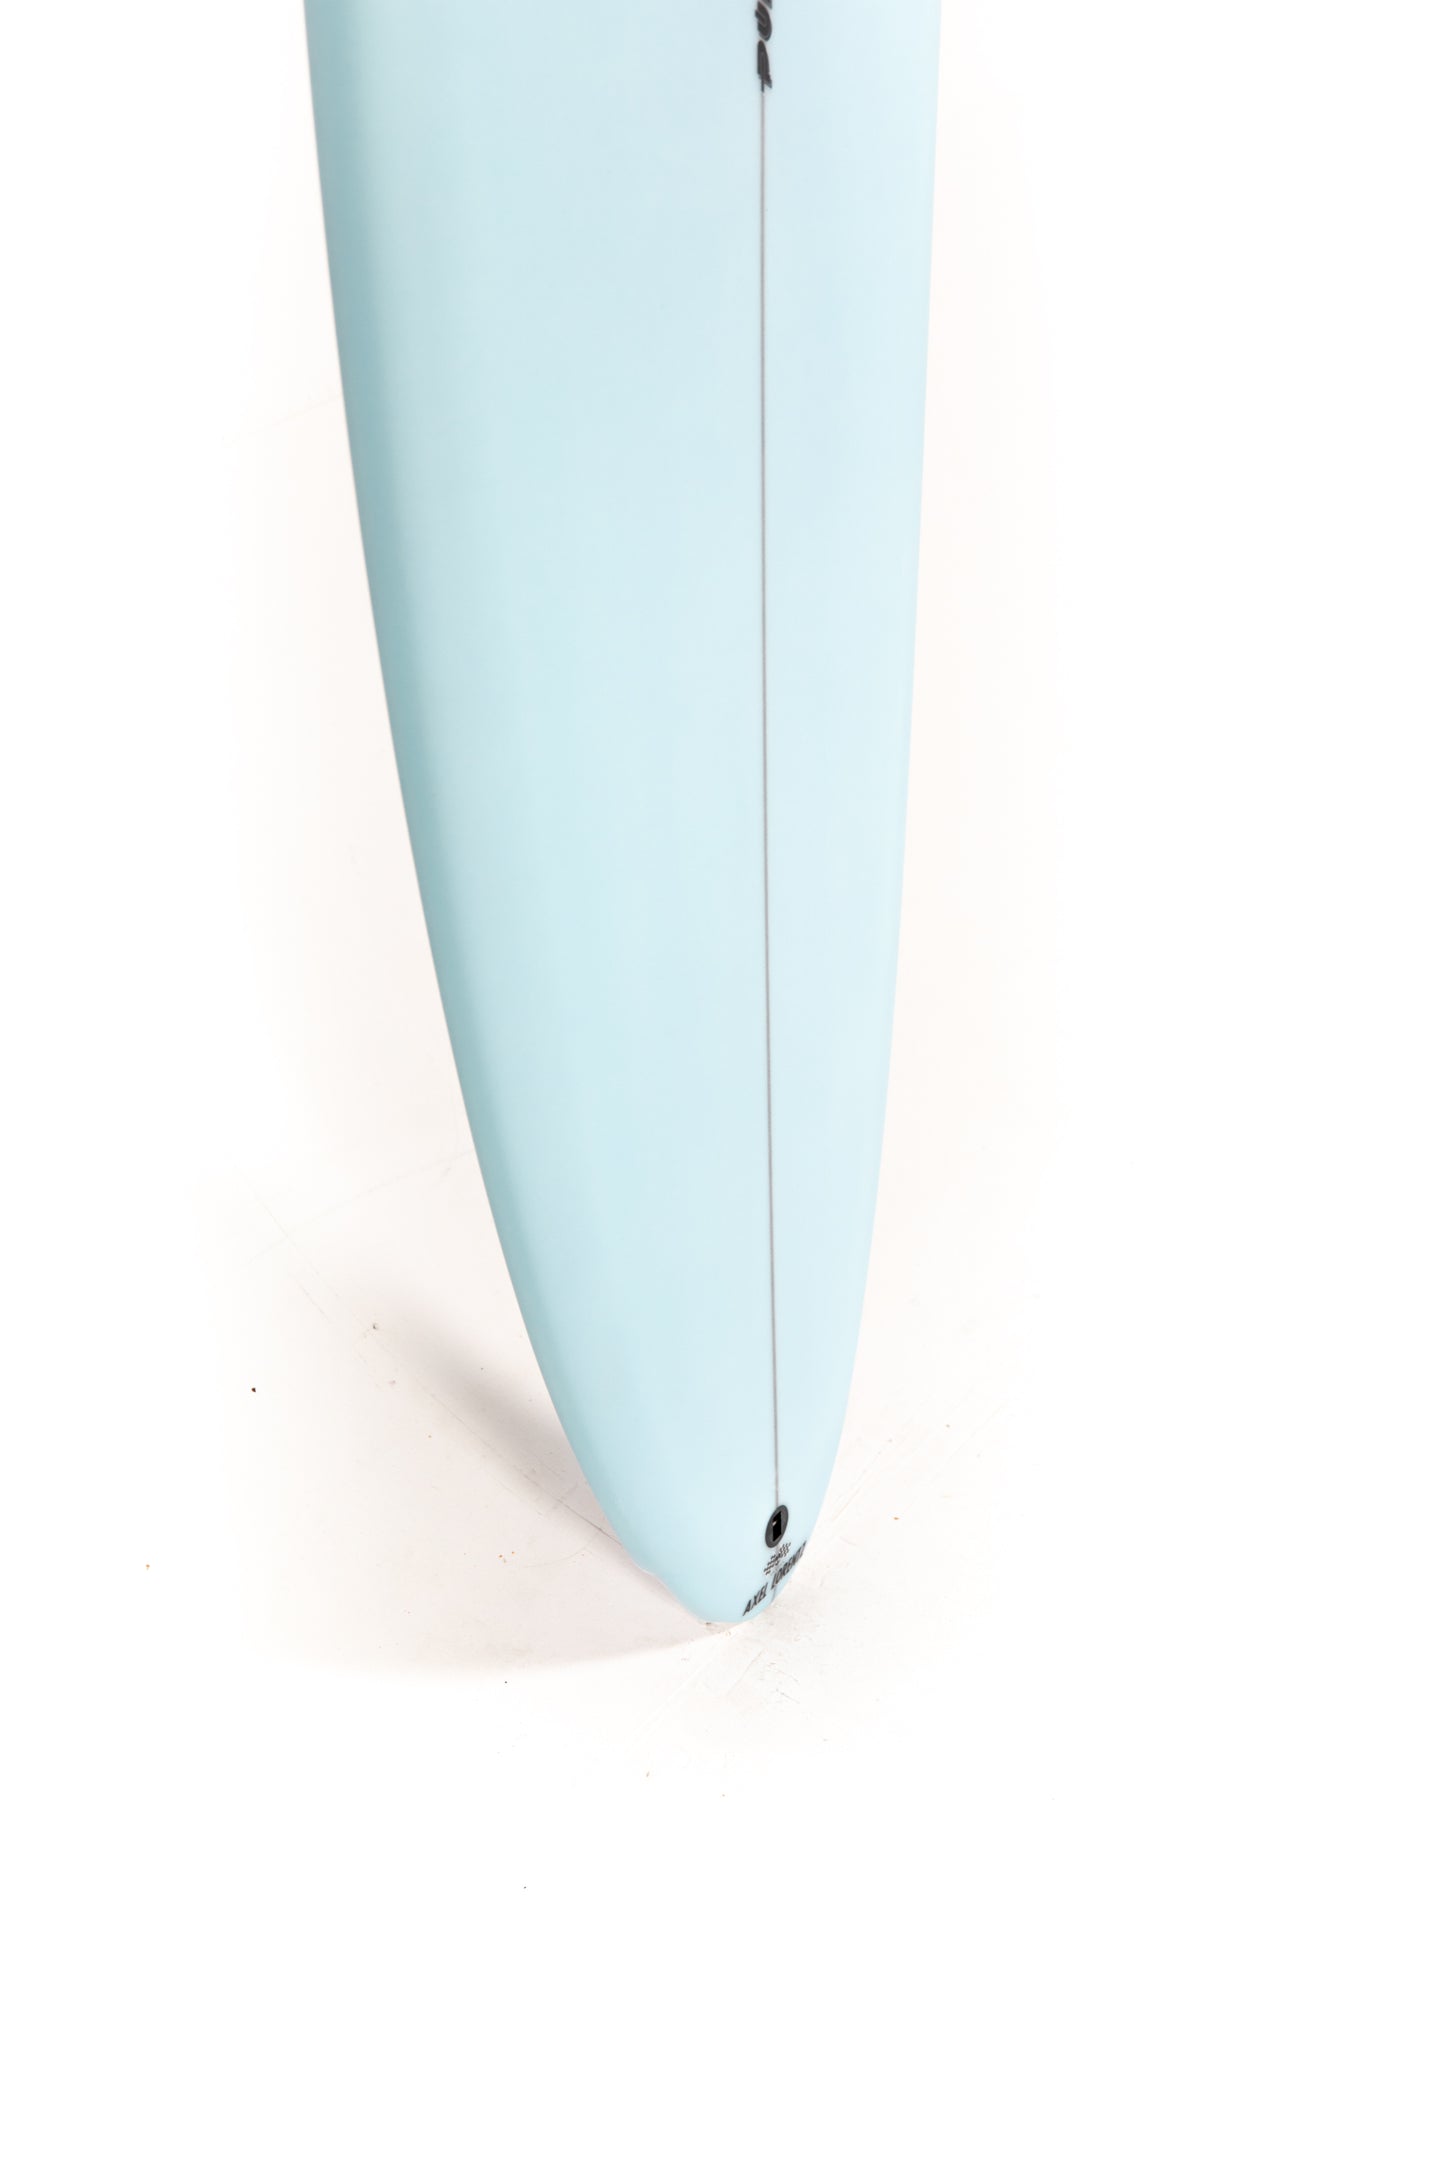 
                  
                    Pukas-Surf-Shop-Pukas-Surfboards-Lady-Twin-Axel-Lorentz-6_4
                  
                